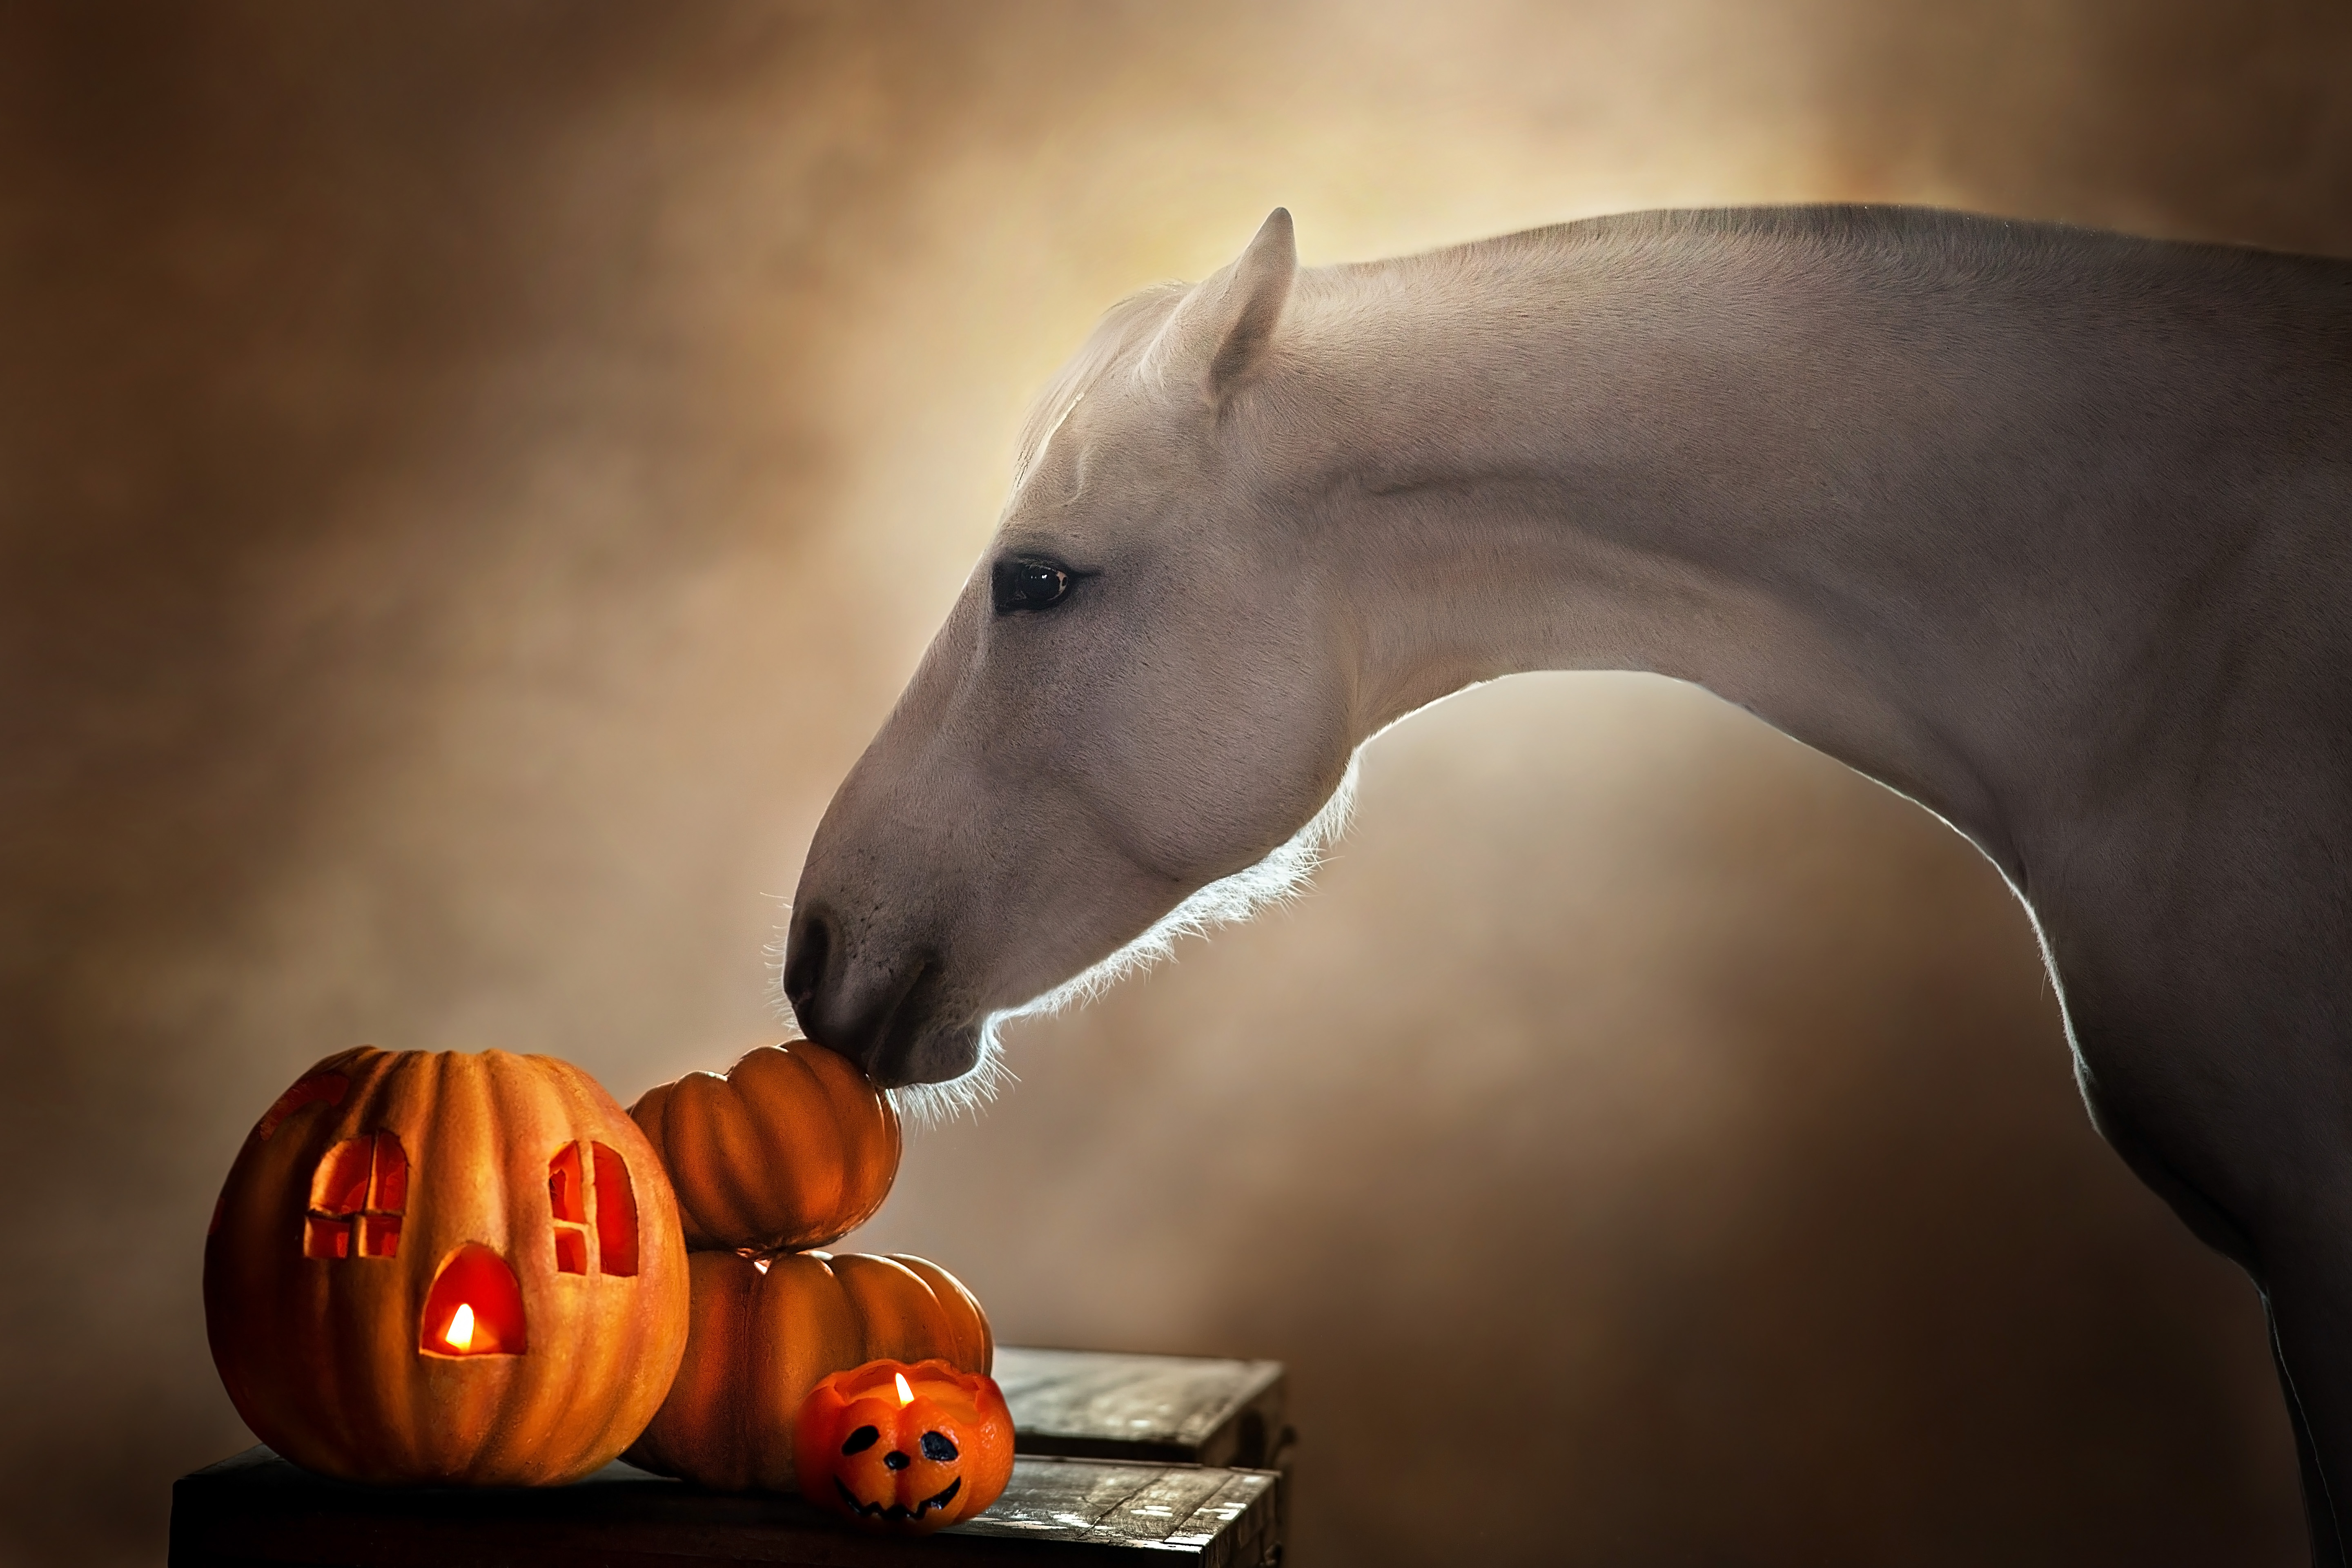 horse grazing over pumpkins